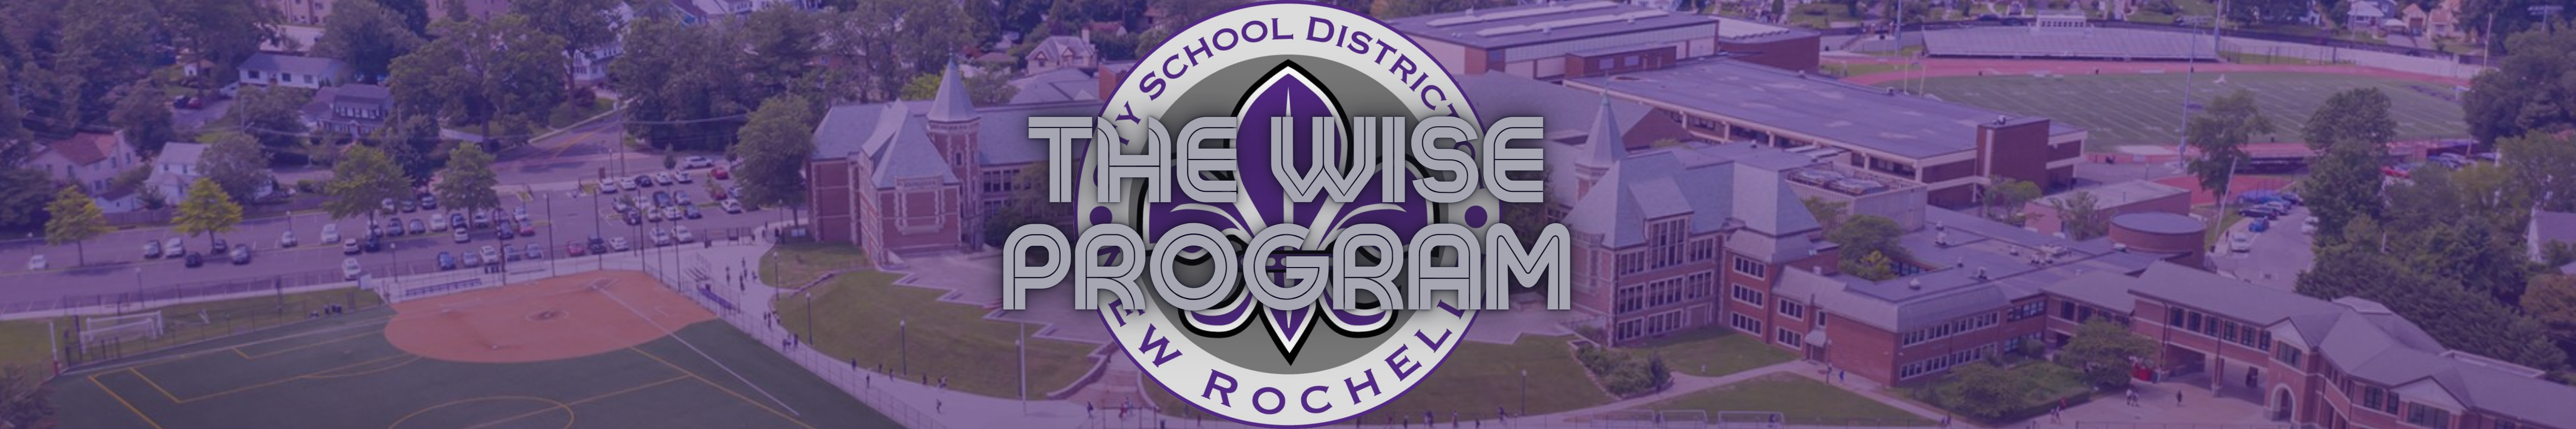 The WISE Program banner